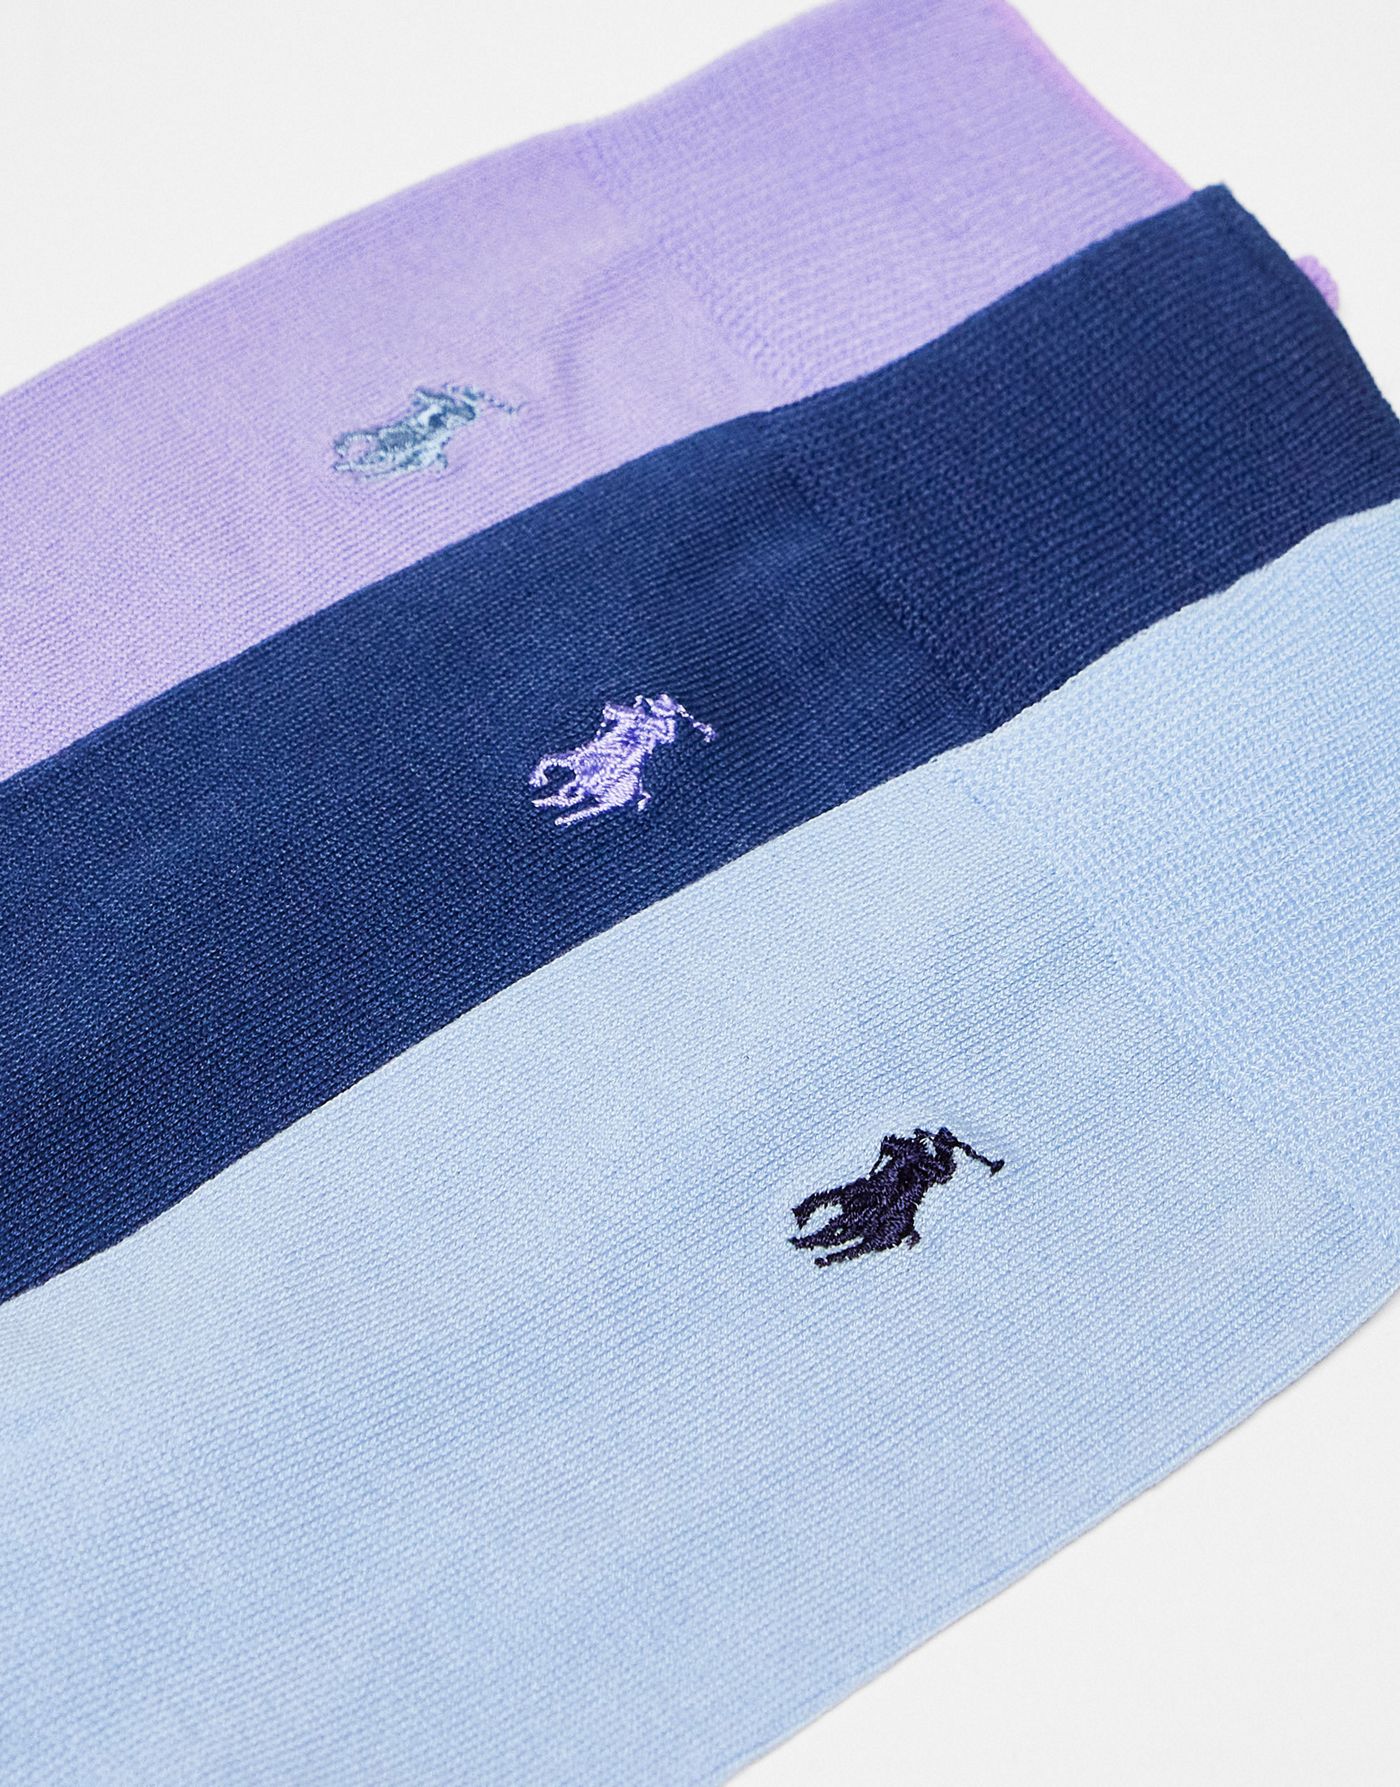 Polo Ralph Lauren 3 pack mercerized cotton socks in purple, blue, navy with pony logo